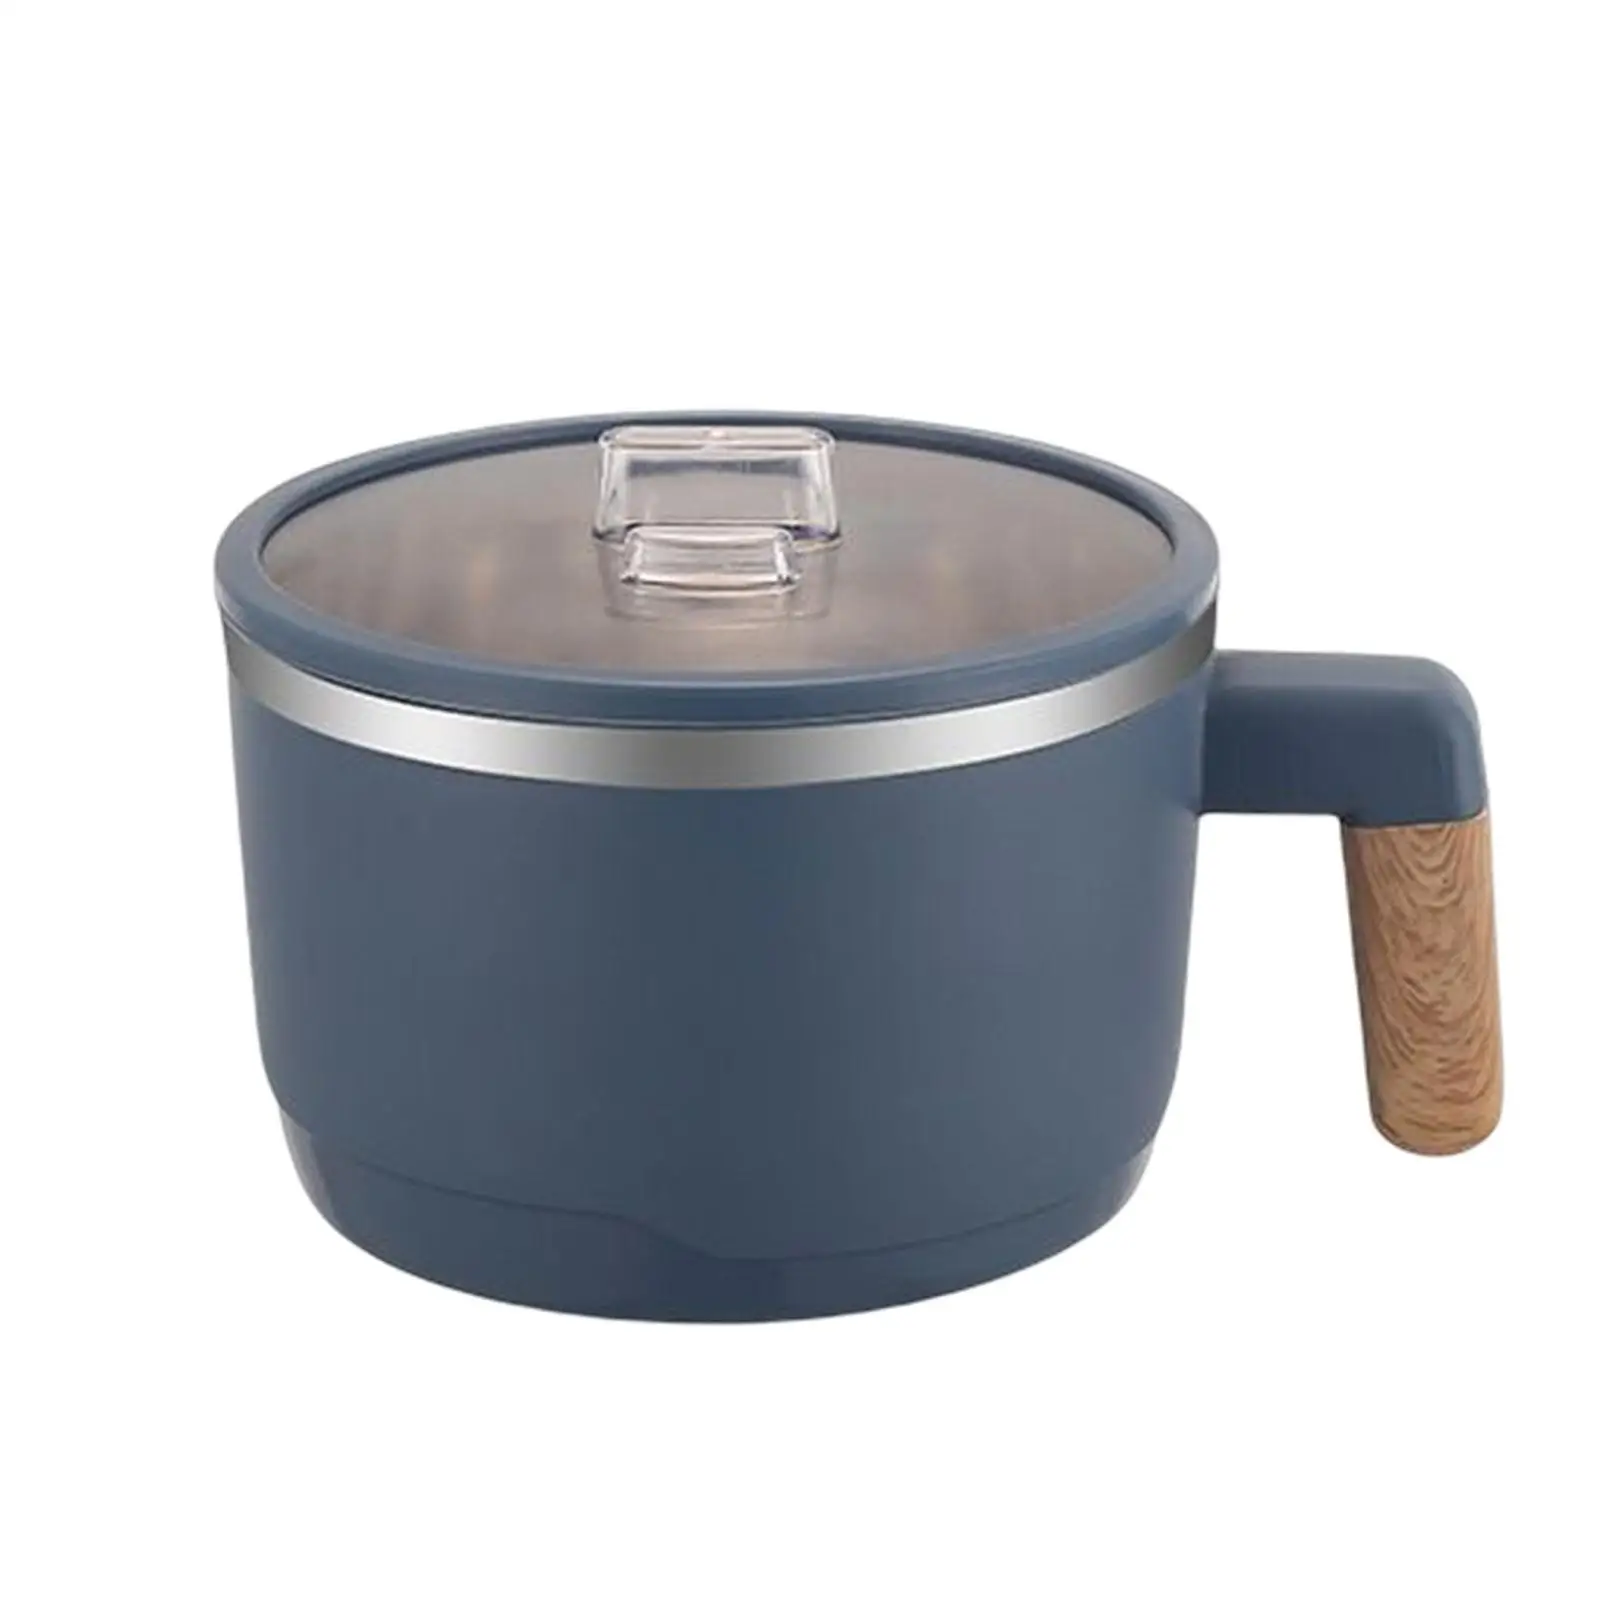 Portable Ramen Bowl Soup Bowl Serving Bowl 1200ml for Dorm Hiking Travel